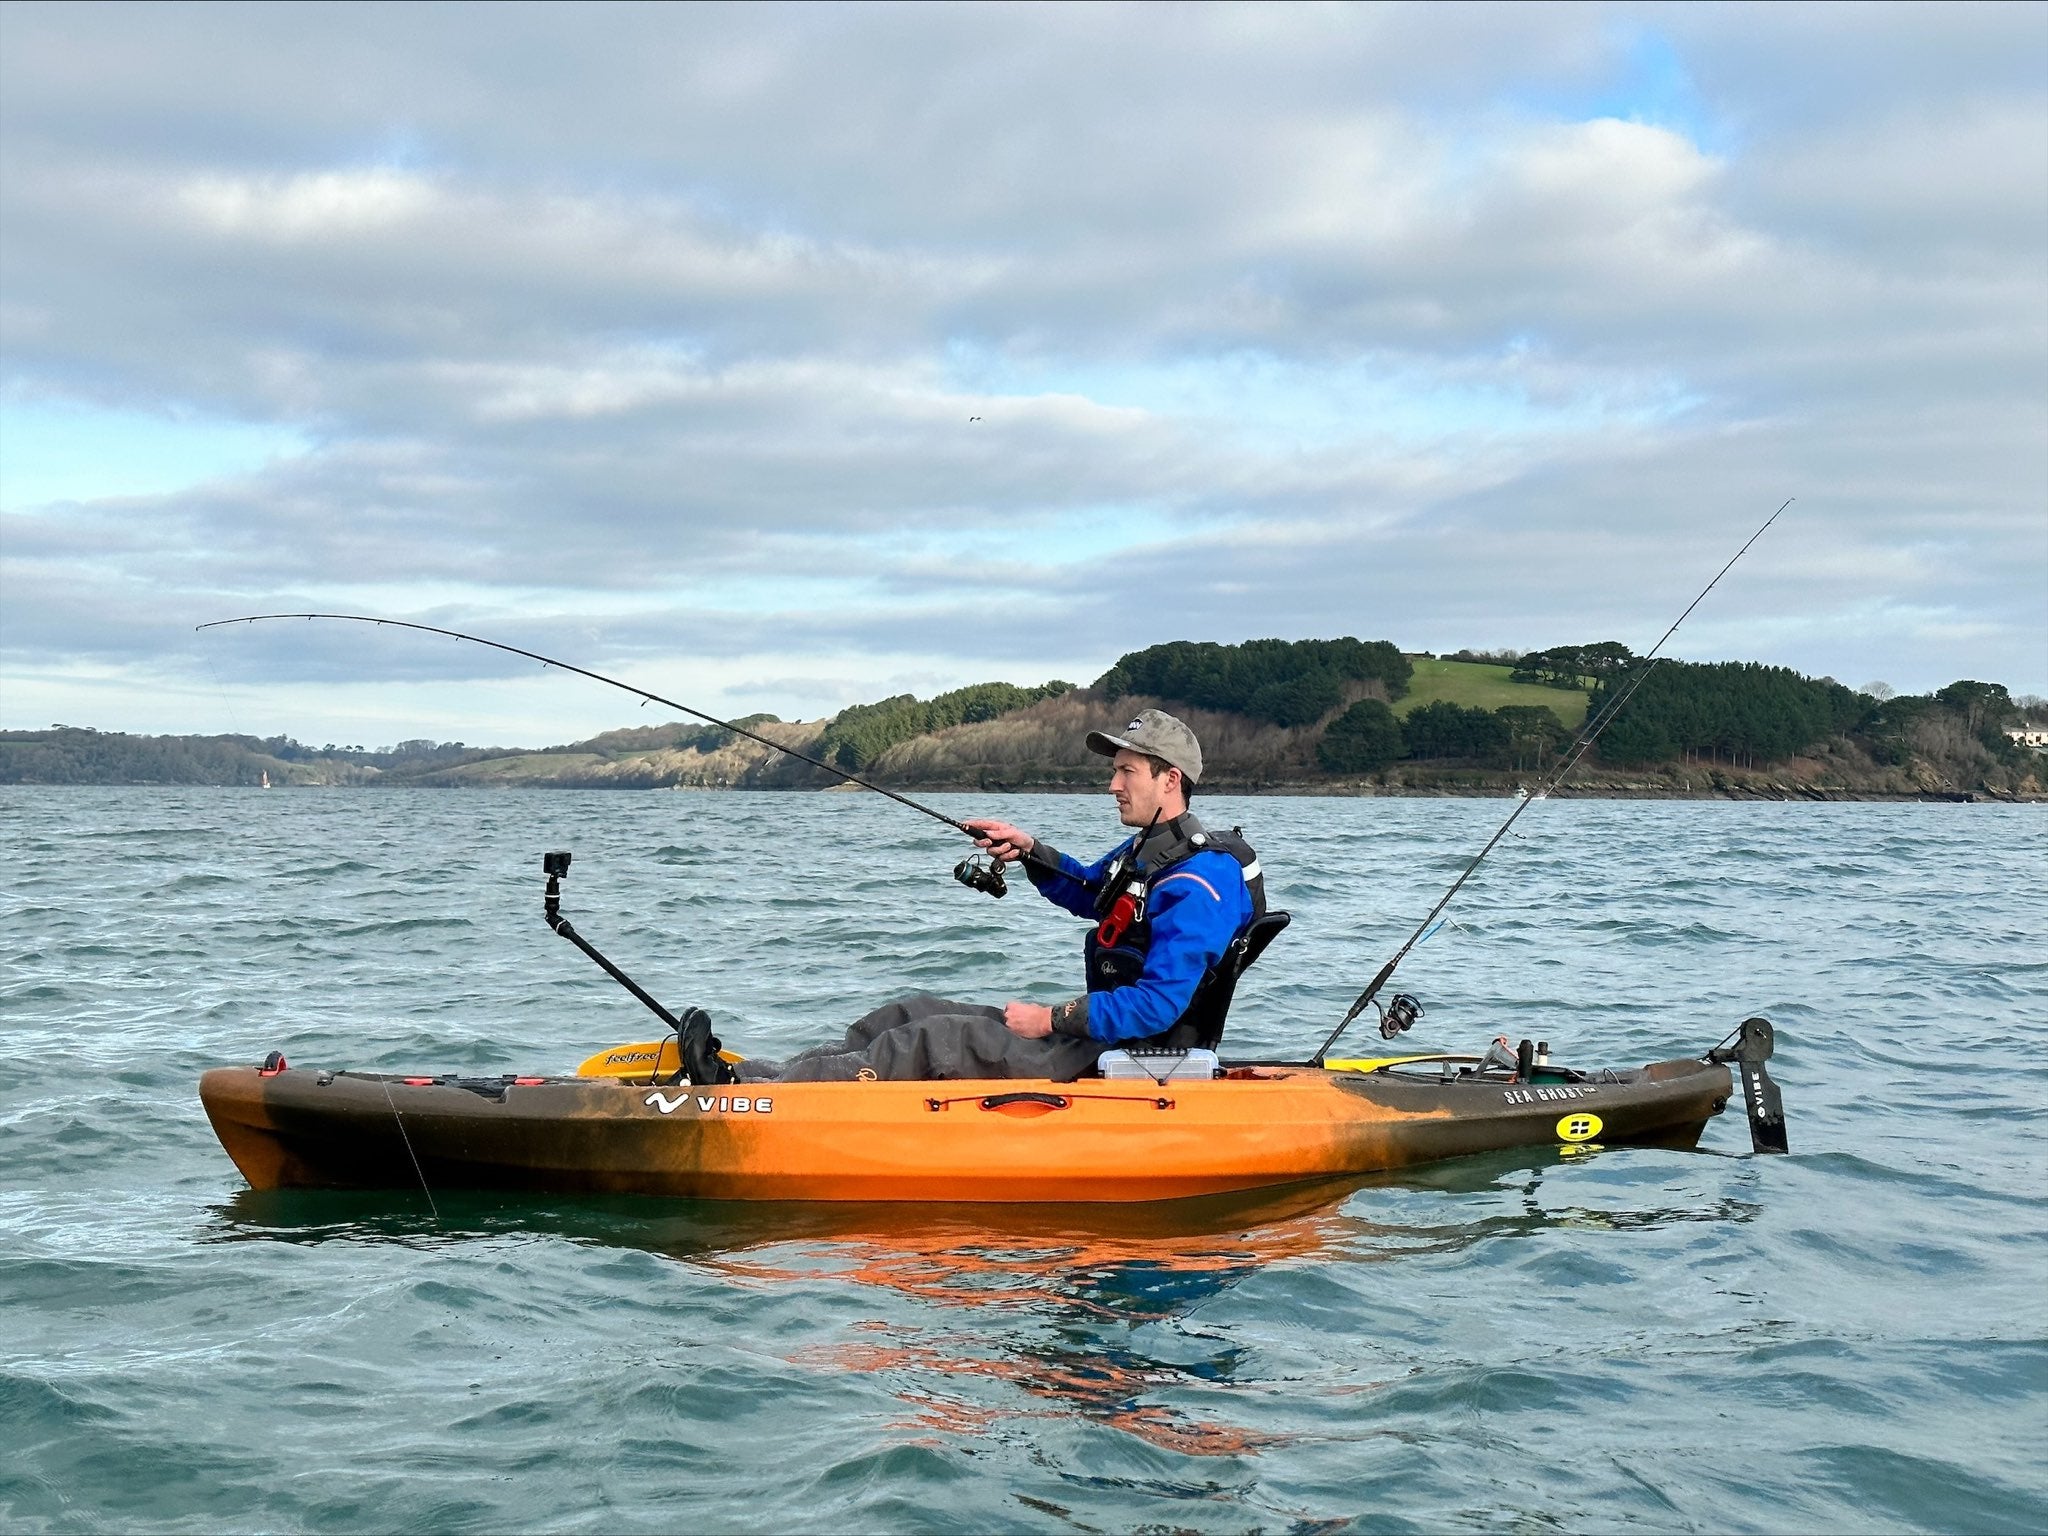 Fishing on the Vibe Sea Ghost 110 kayak in Cornwall